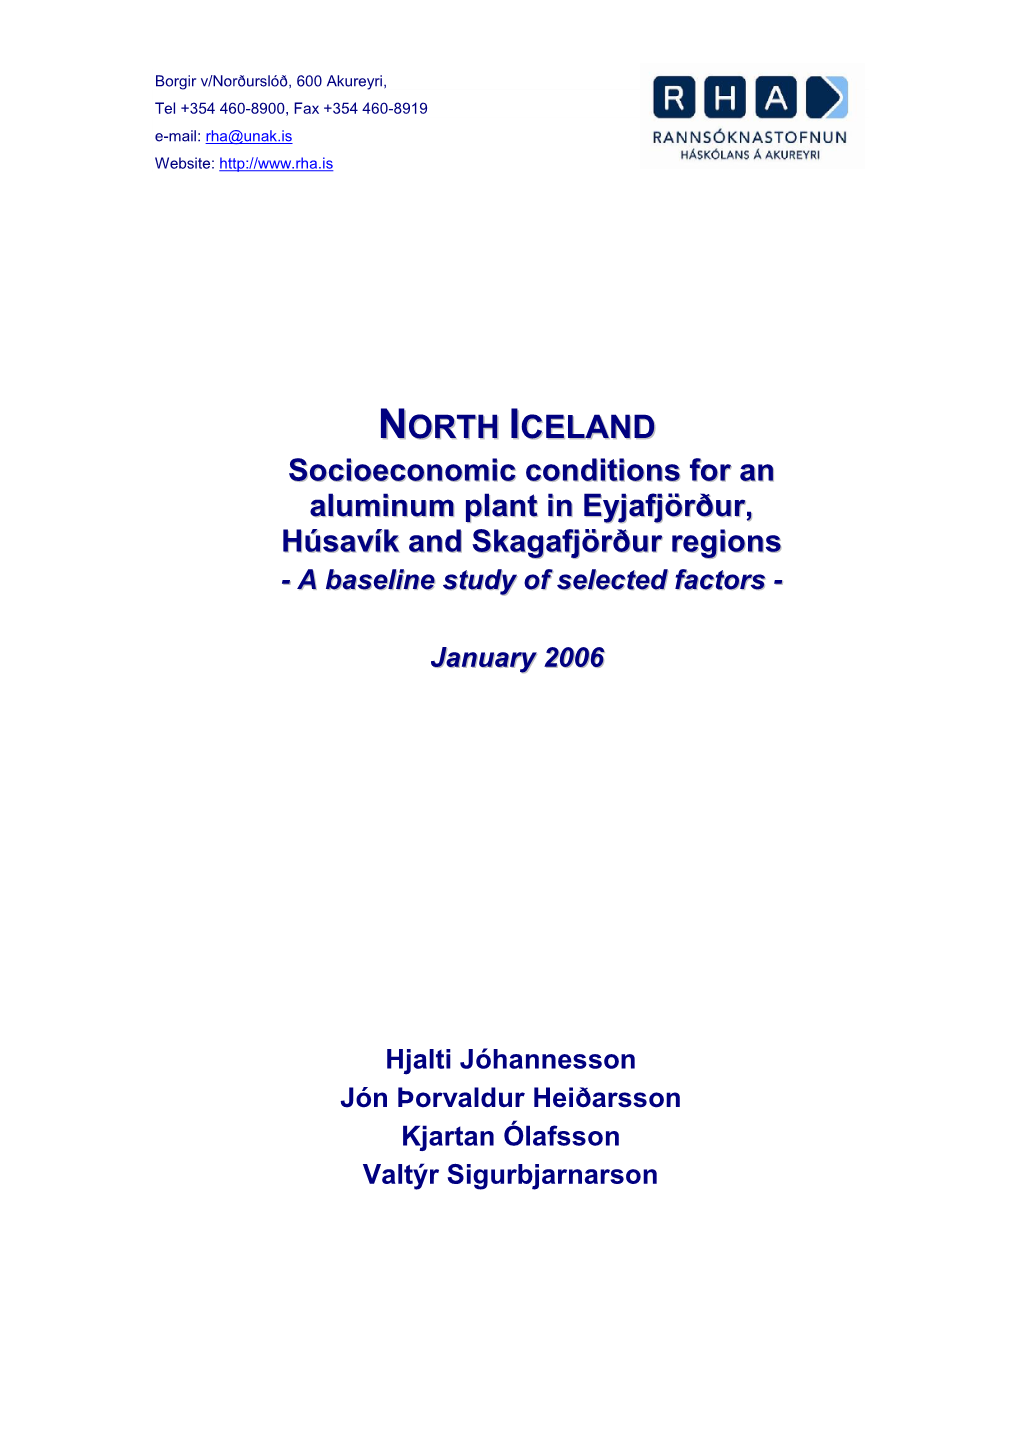 NORTH ICELAND Socioeconomic Conditions for an Aluminum Plant in Eyjafjörður, Húsavík and Skagafjörður Regions - a Baseline Study of Selected Factors